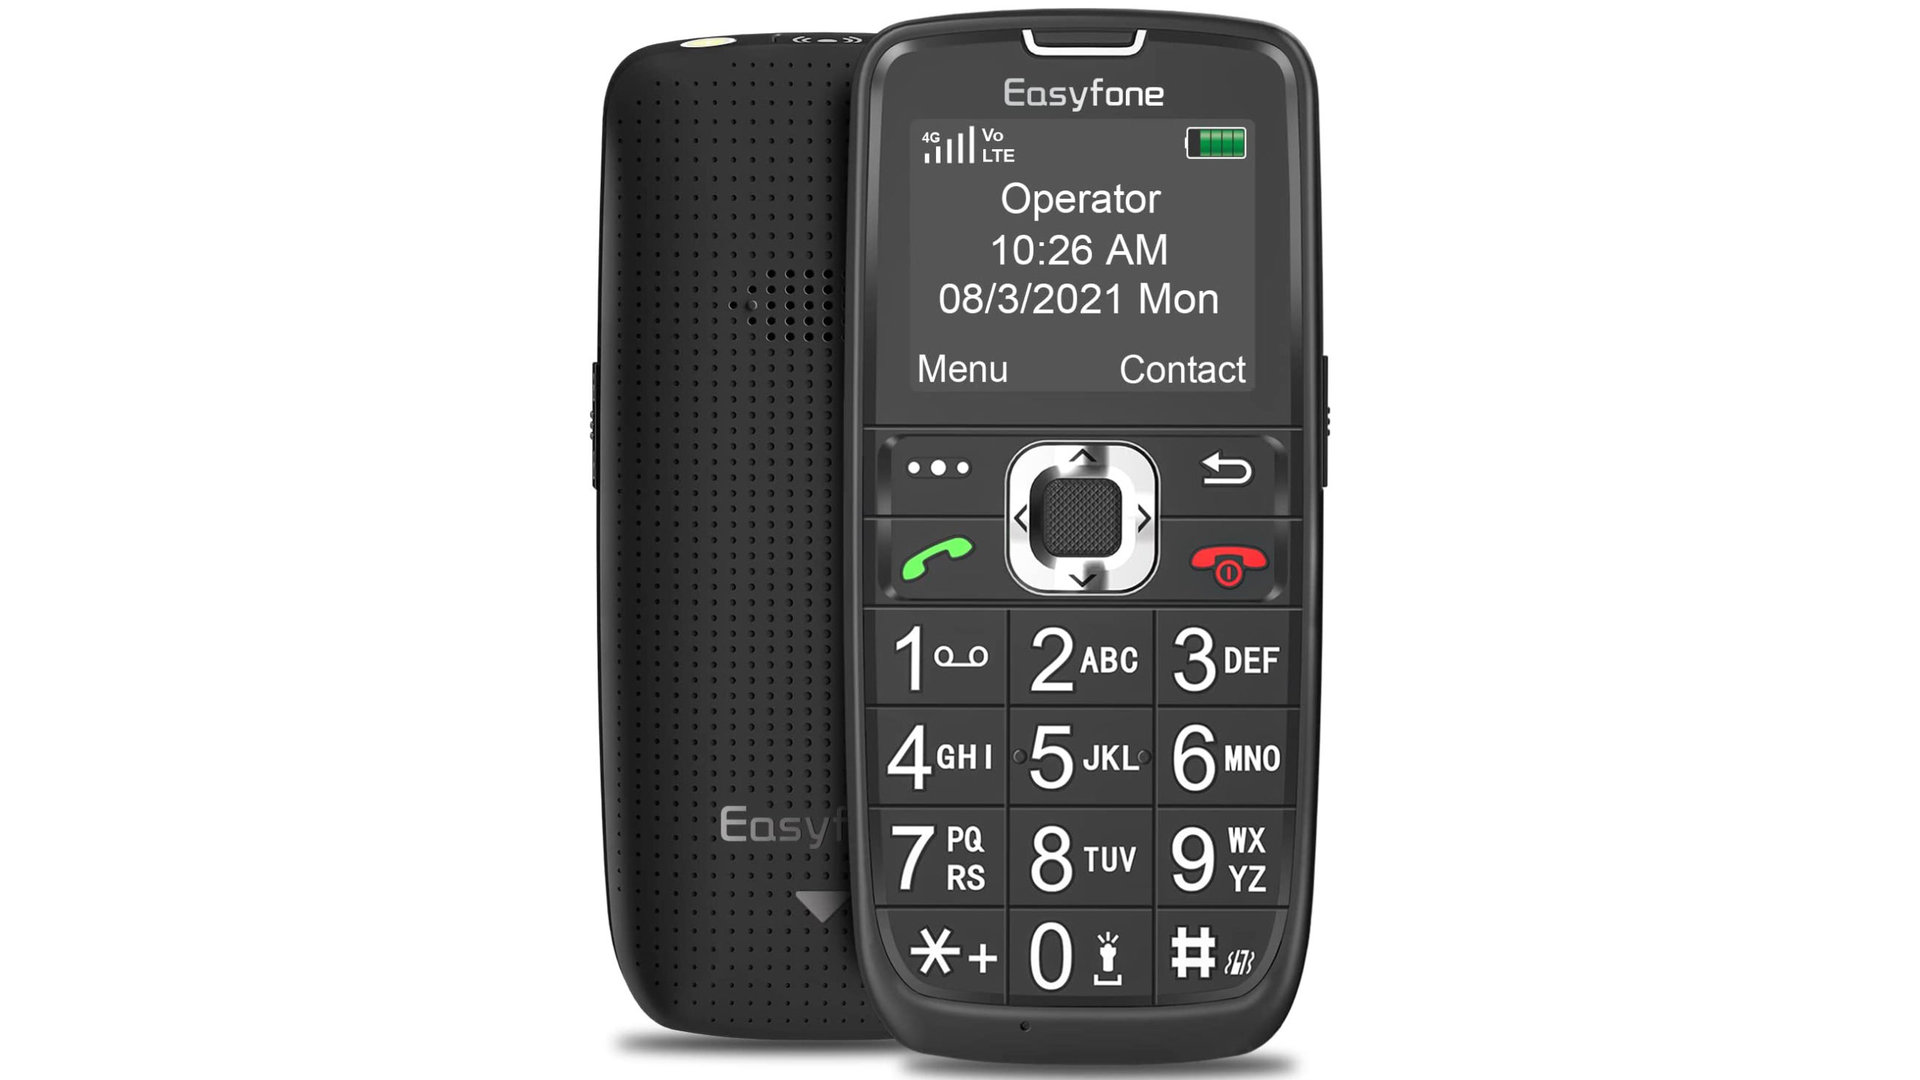 Easyfone Prime A6 - Phones for seniors